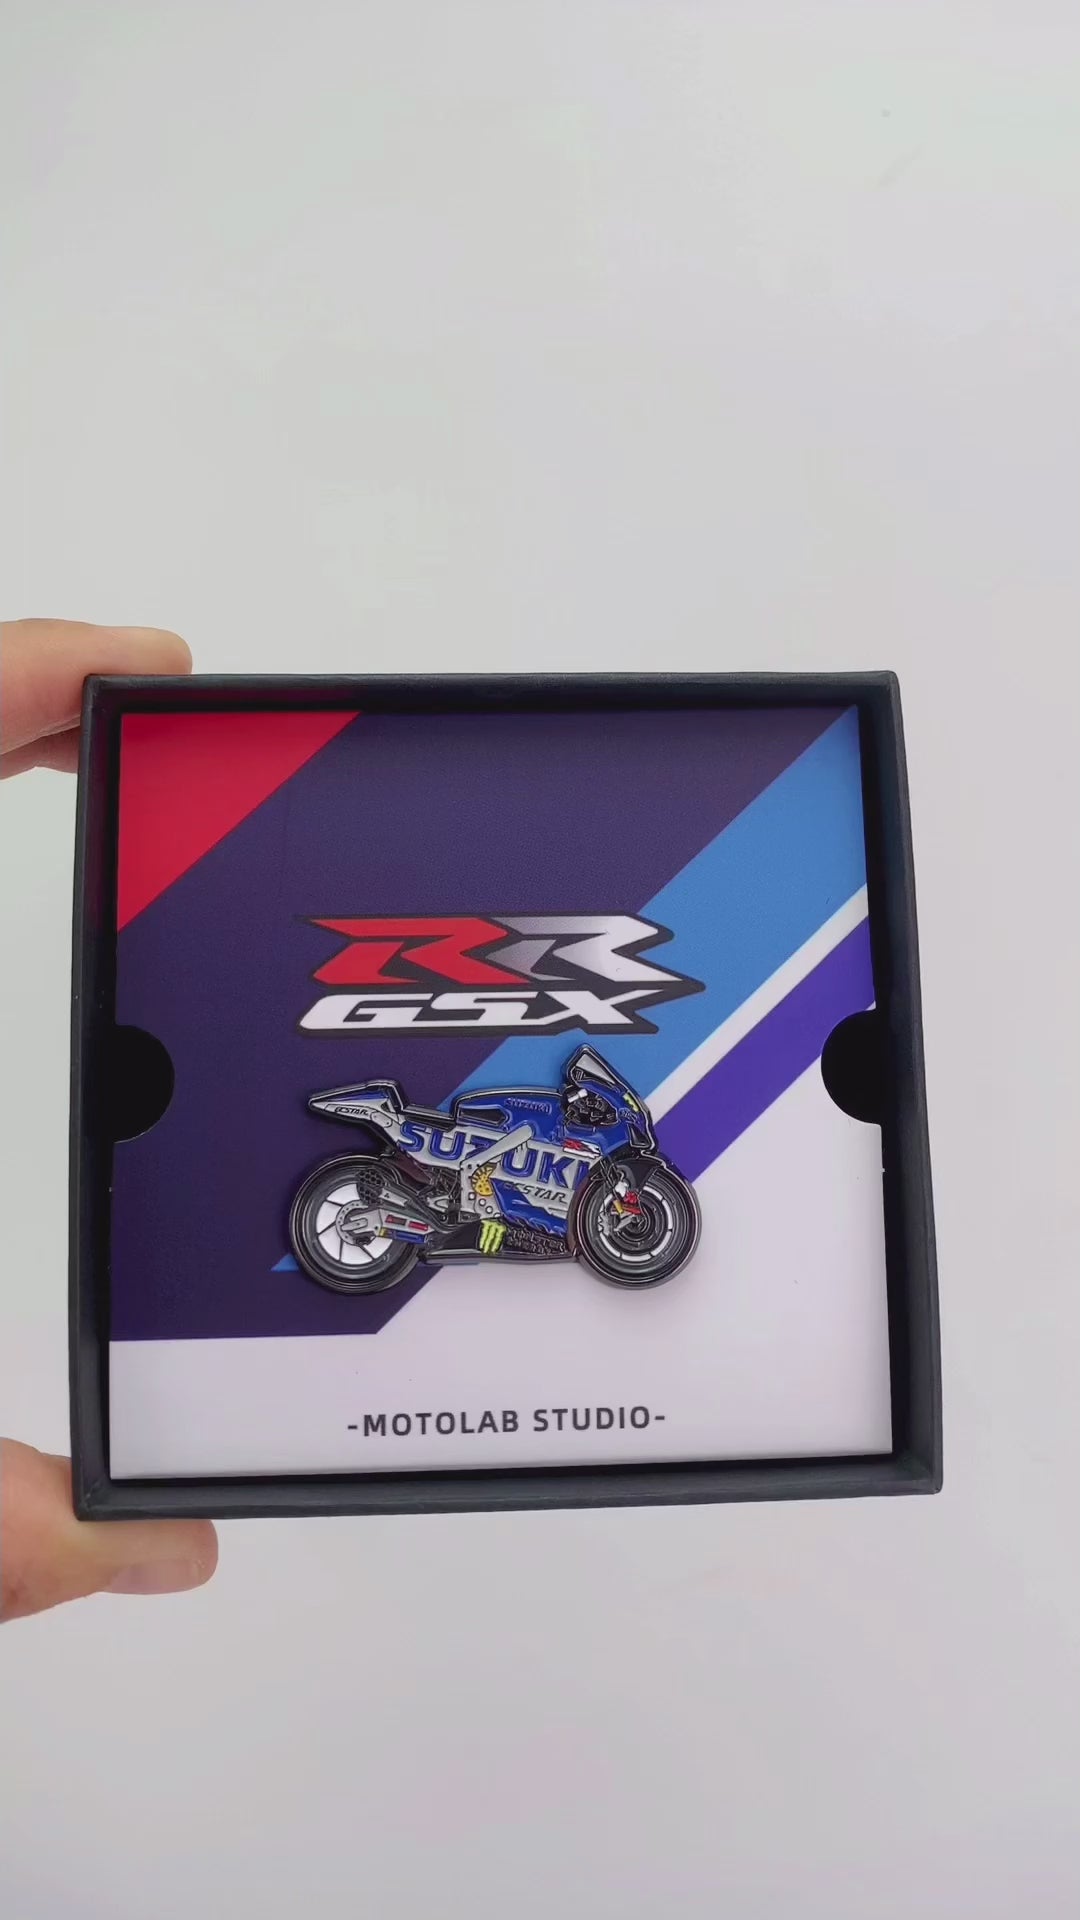 Suzuki-GSX-RR-1000-MotoGP-Grand-Prix-Racing-Bike-Motorbike-Alex-Rins-42-Motorcycle-Enamel-Lapel-Pin-Badges-Video